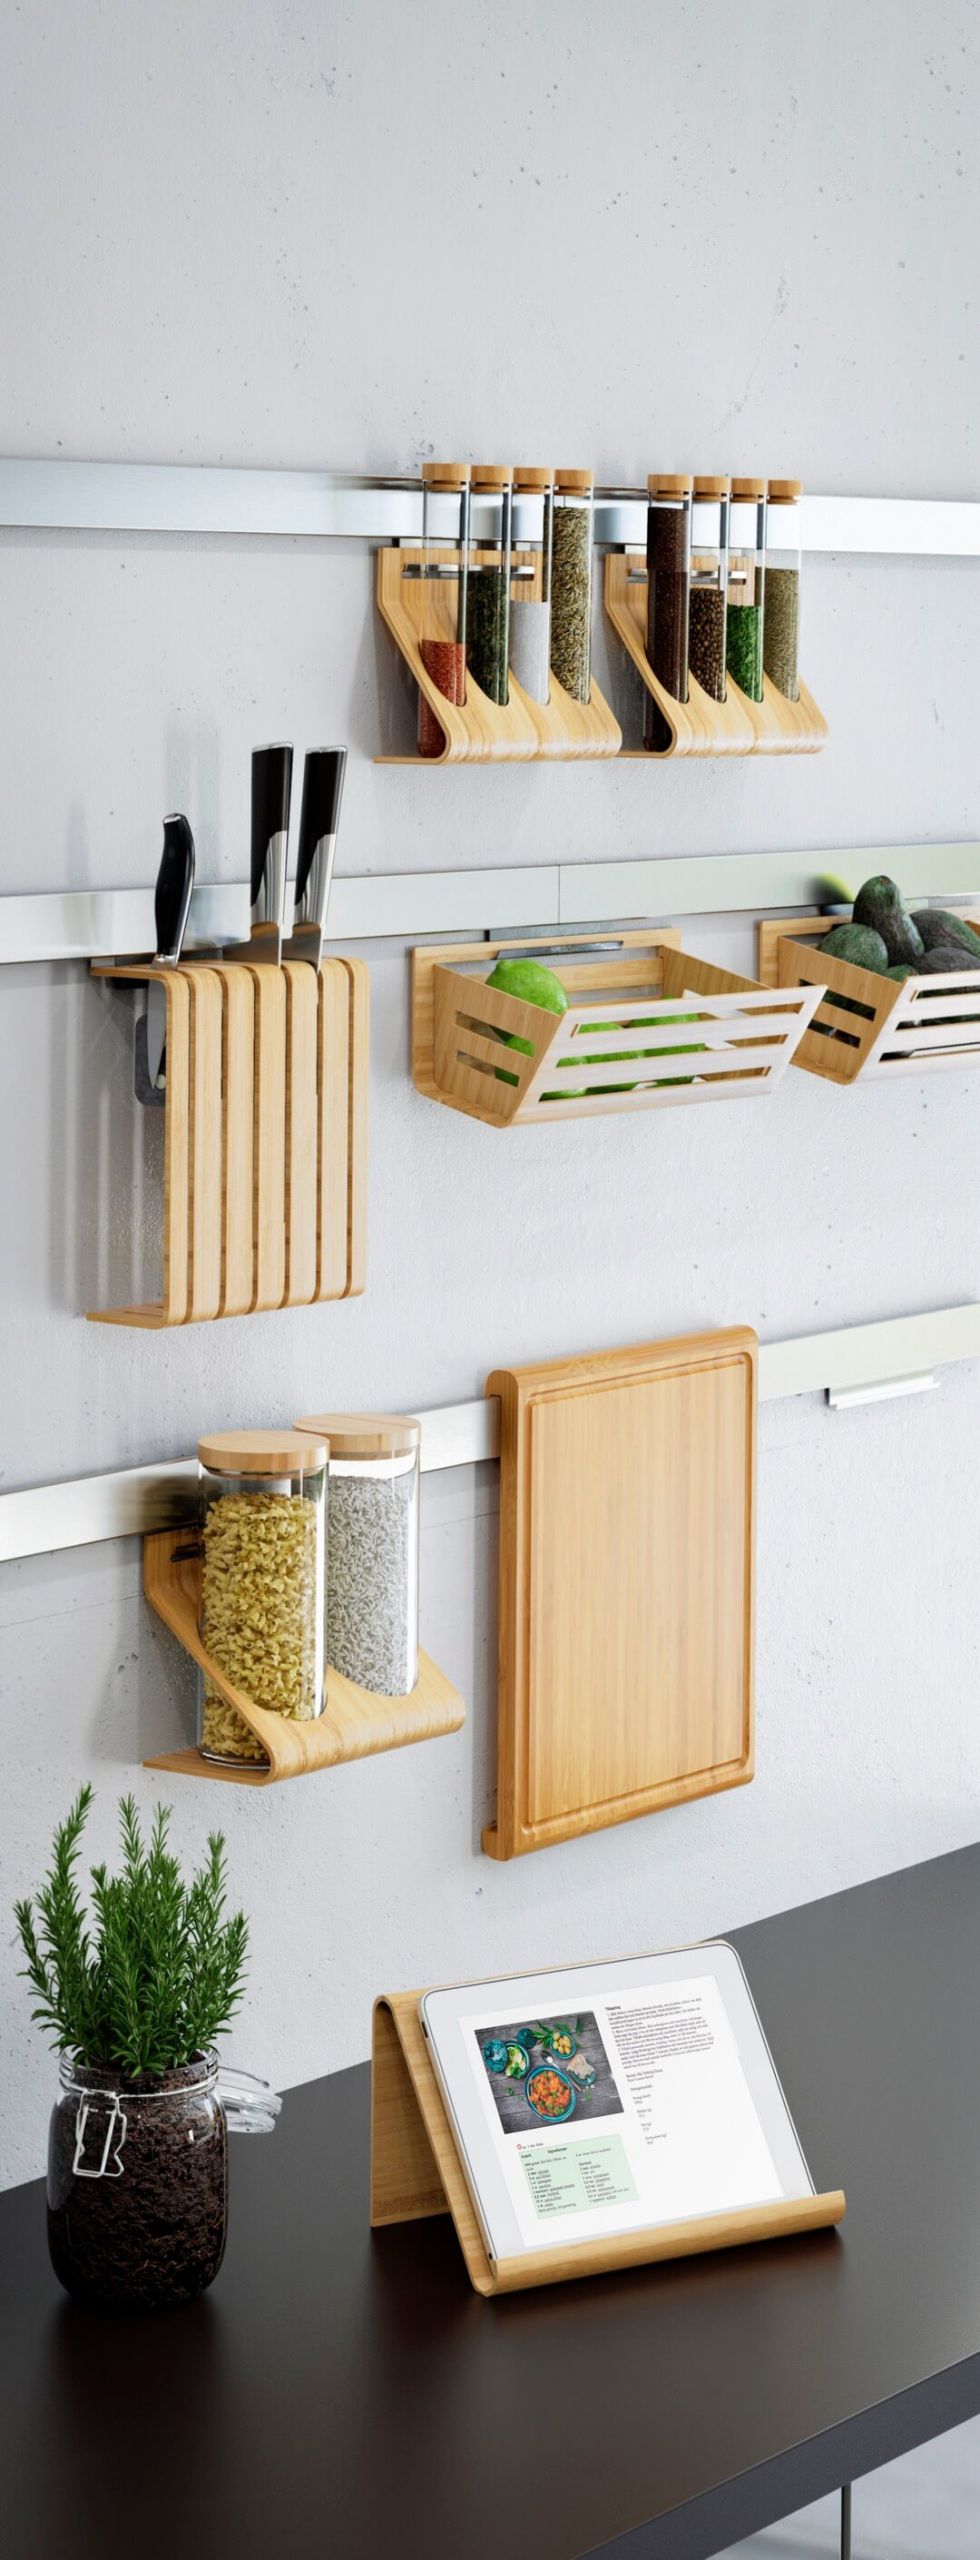 Small Kitchen Shelf Ideas
 45 Best Small Kitchen Storage Organization Ideas and